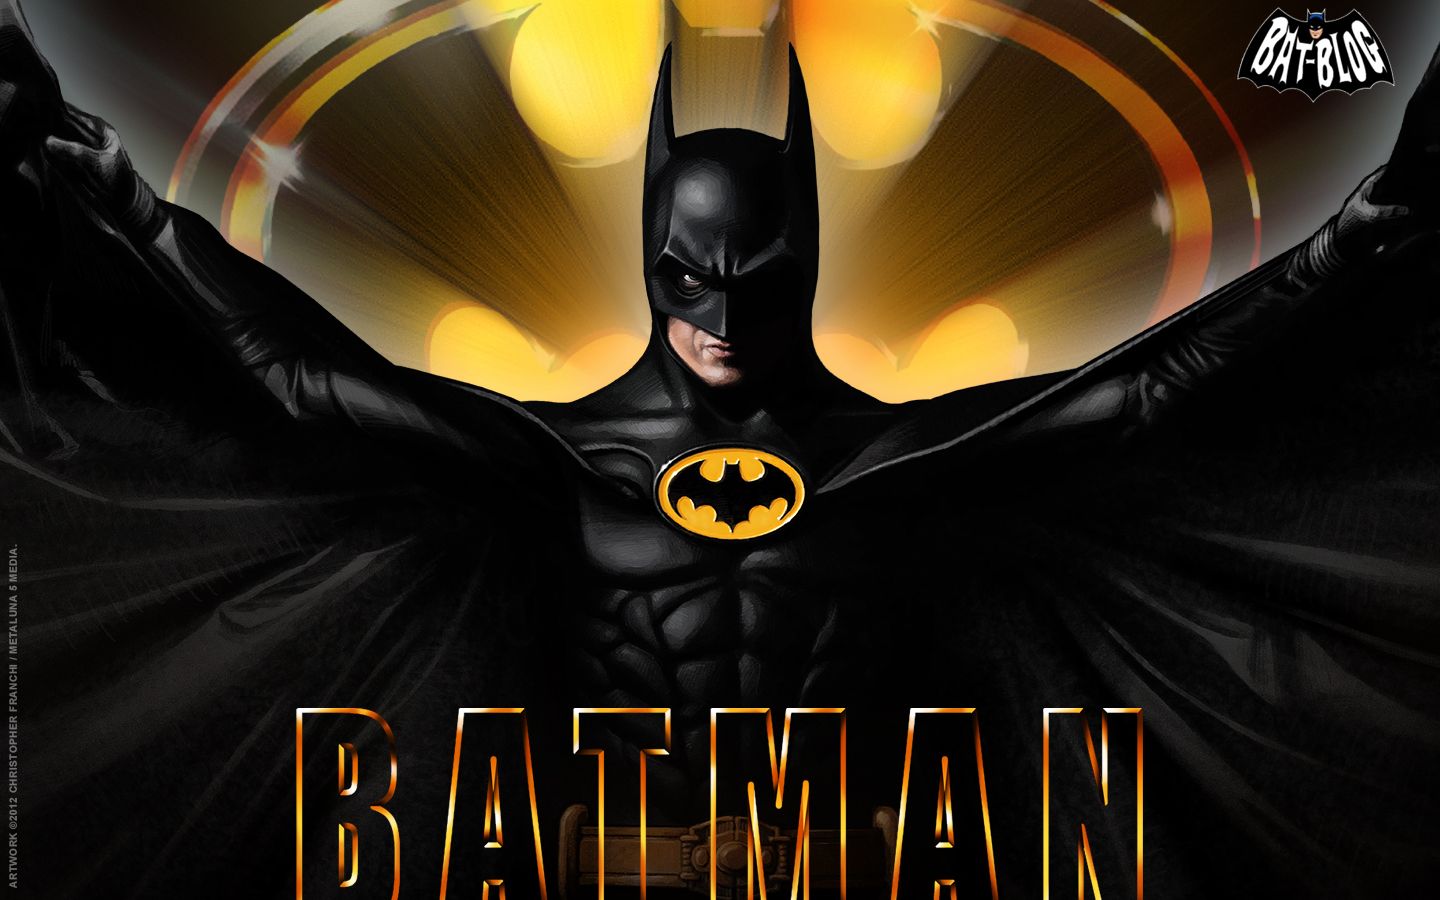 BAT, BATMAN TOYS and COLLECTIBLES: Franchi's 1989 BATMAN MOVIE TRIBUTE Wallpaper!